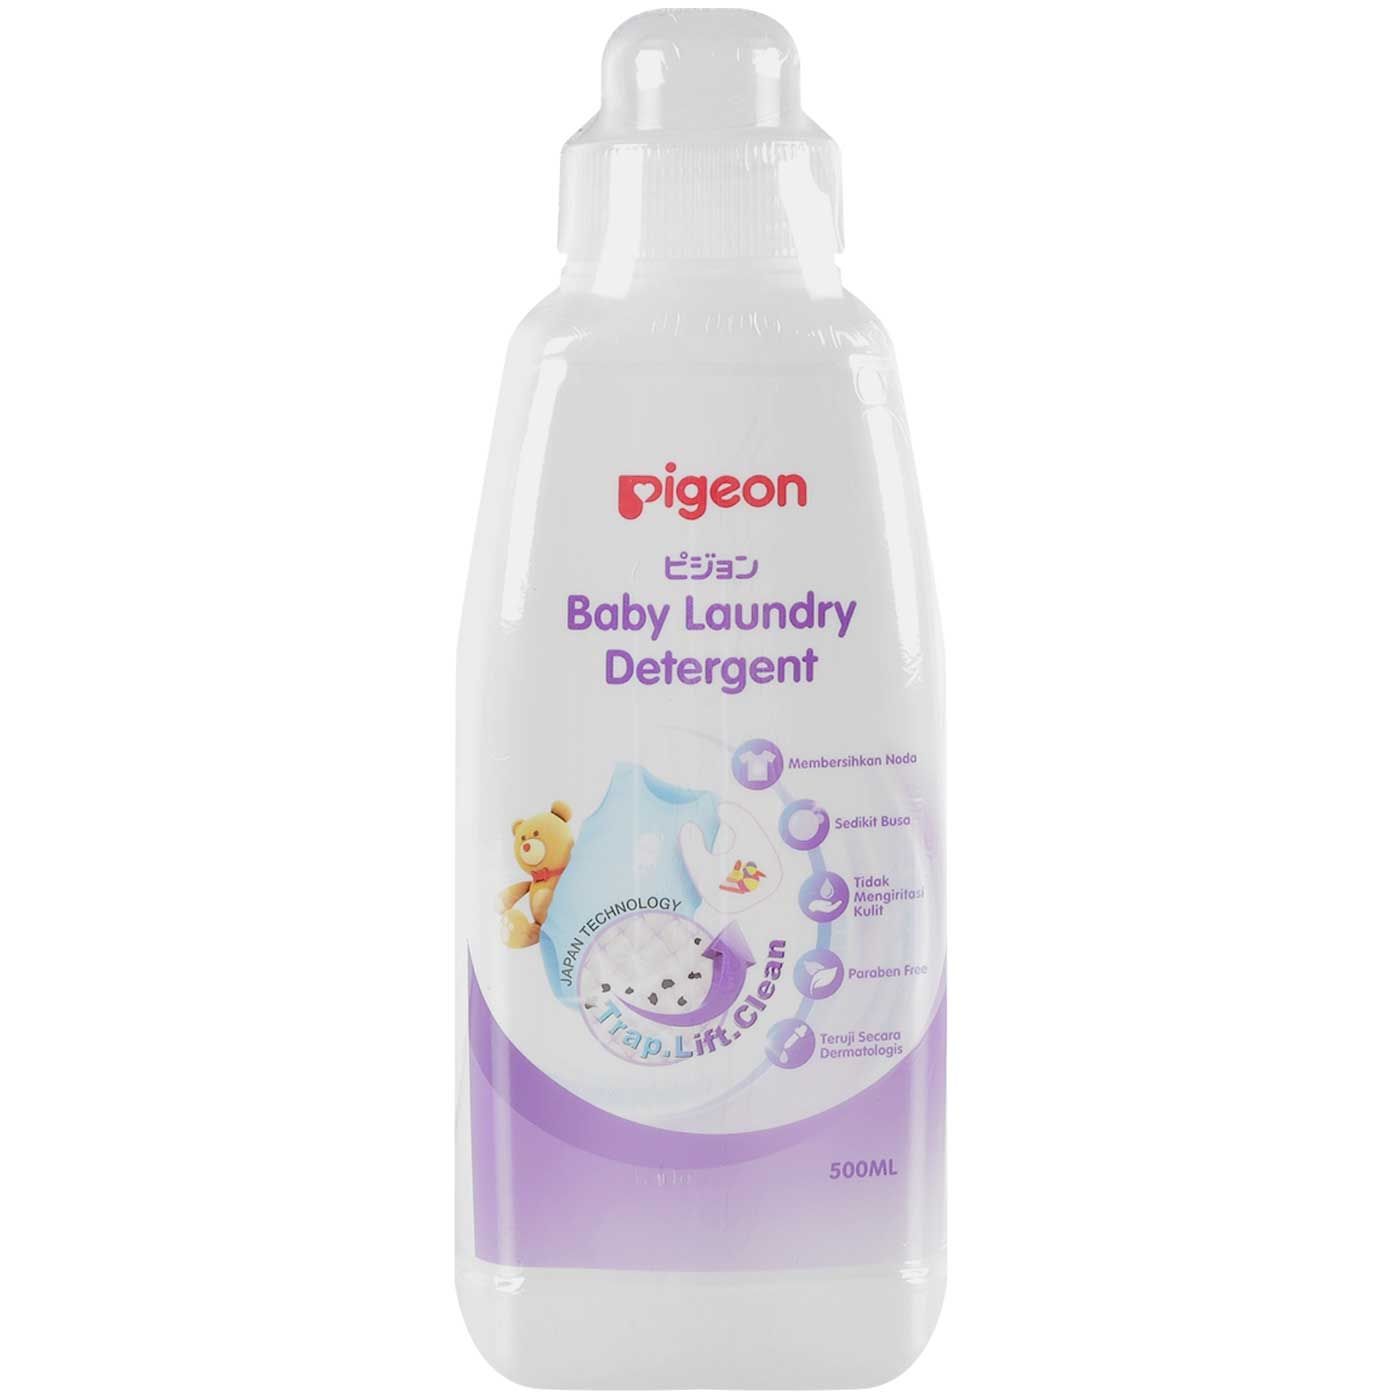 Pigeon Liquid Laundry Detergent 500ml Bottle - 1